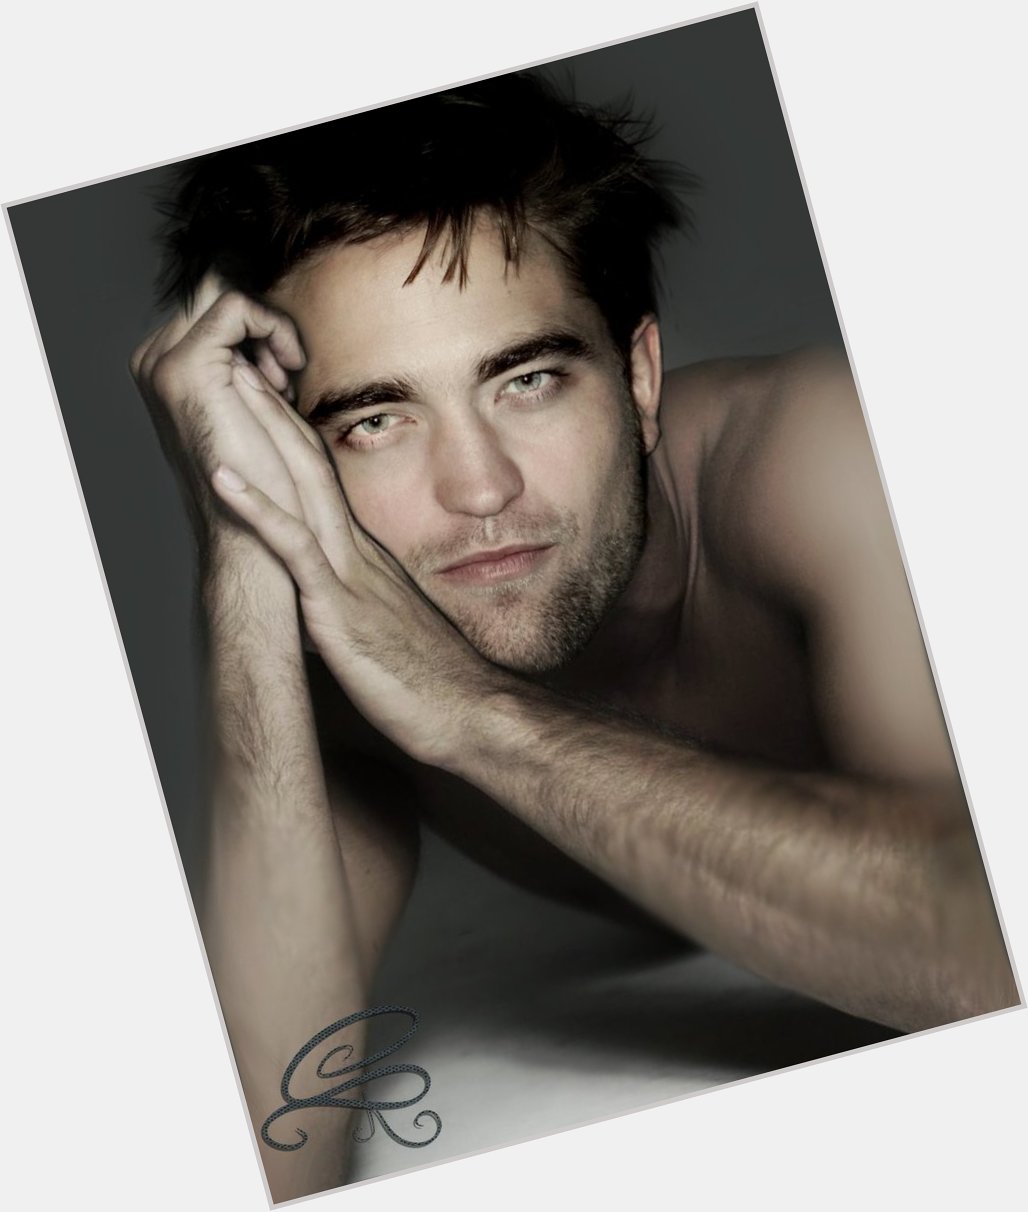 Https://fanpagepress.net/m/J/James Pattinson Dating 3